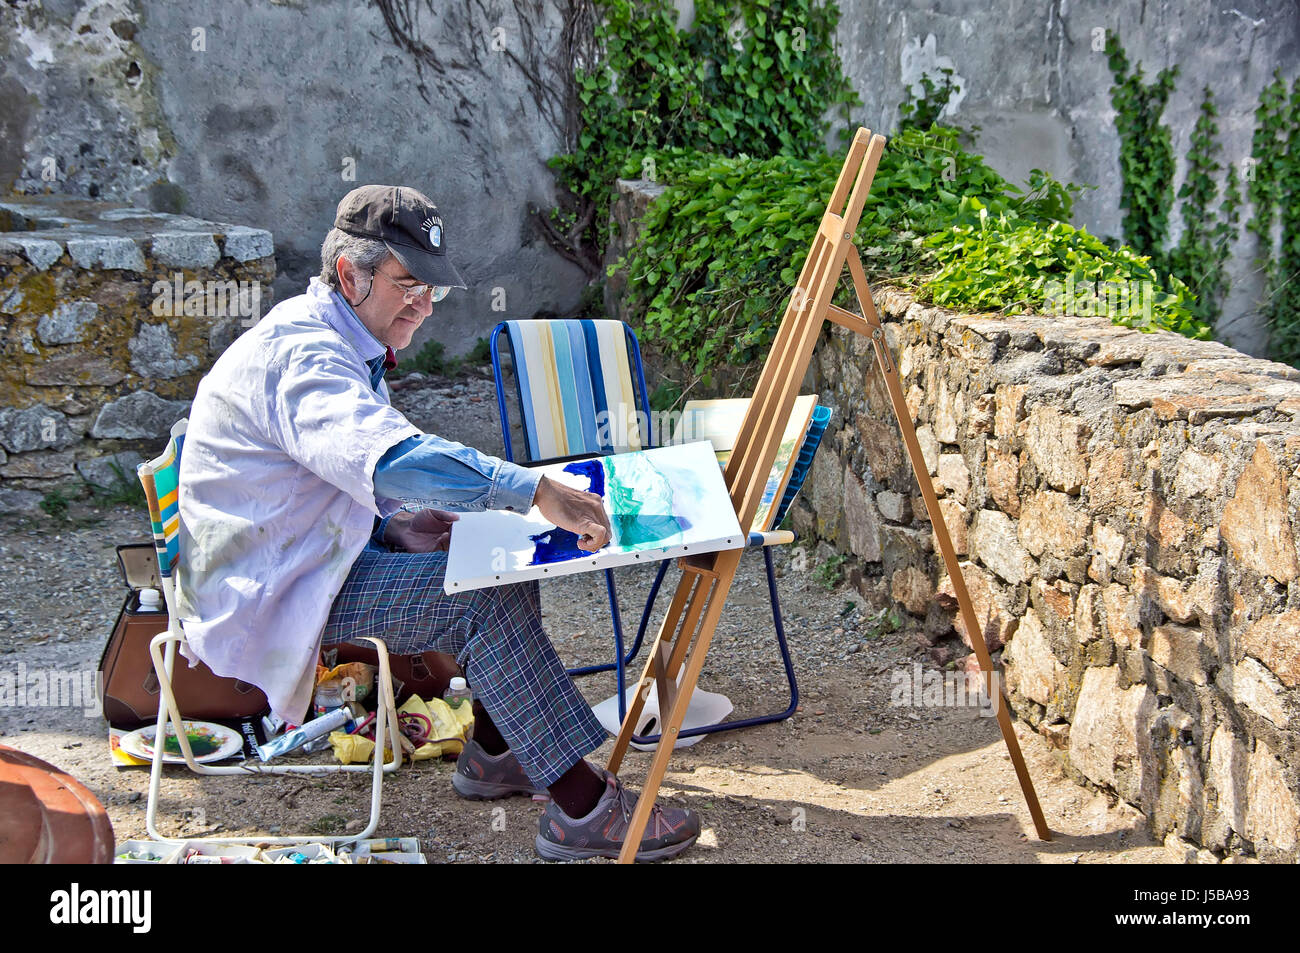 Artist painting a landscape at St. Tropez, France. Stock Photo